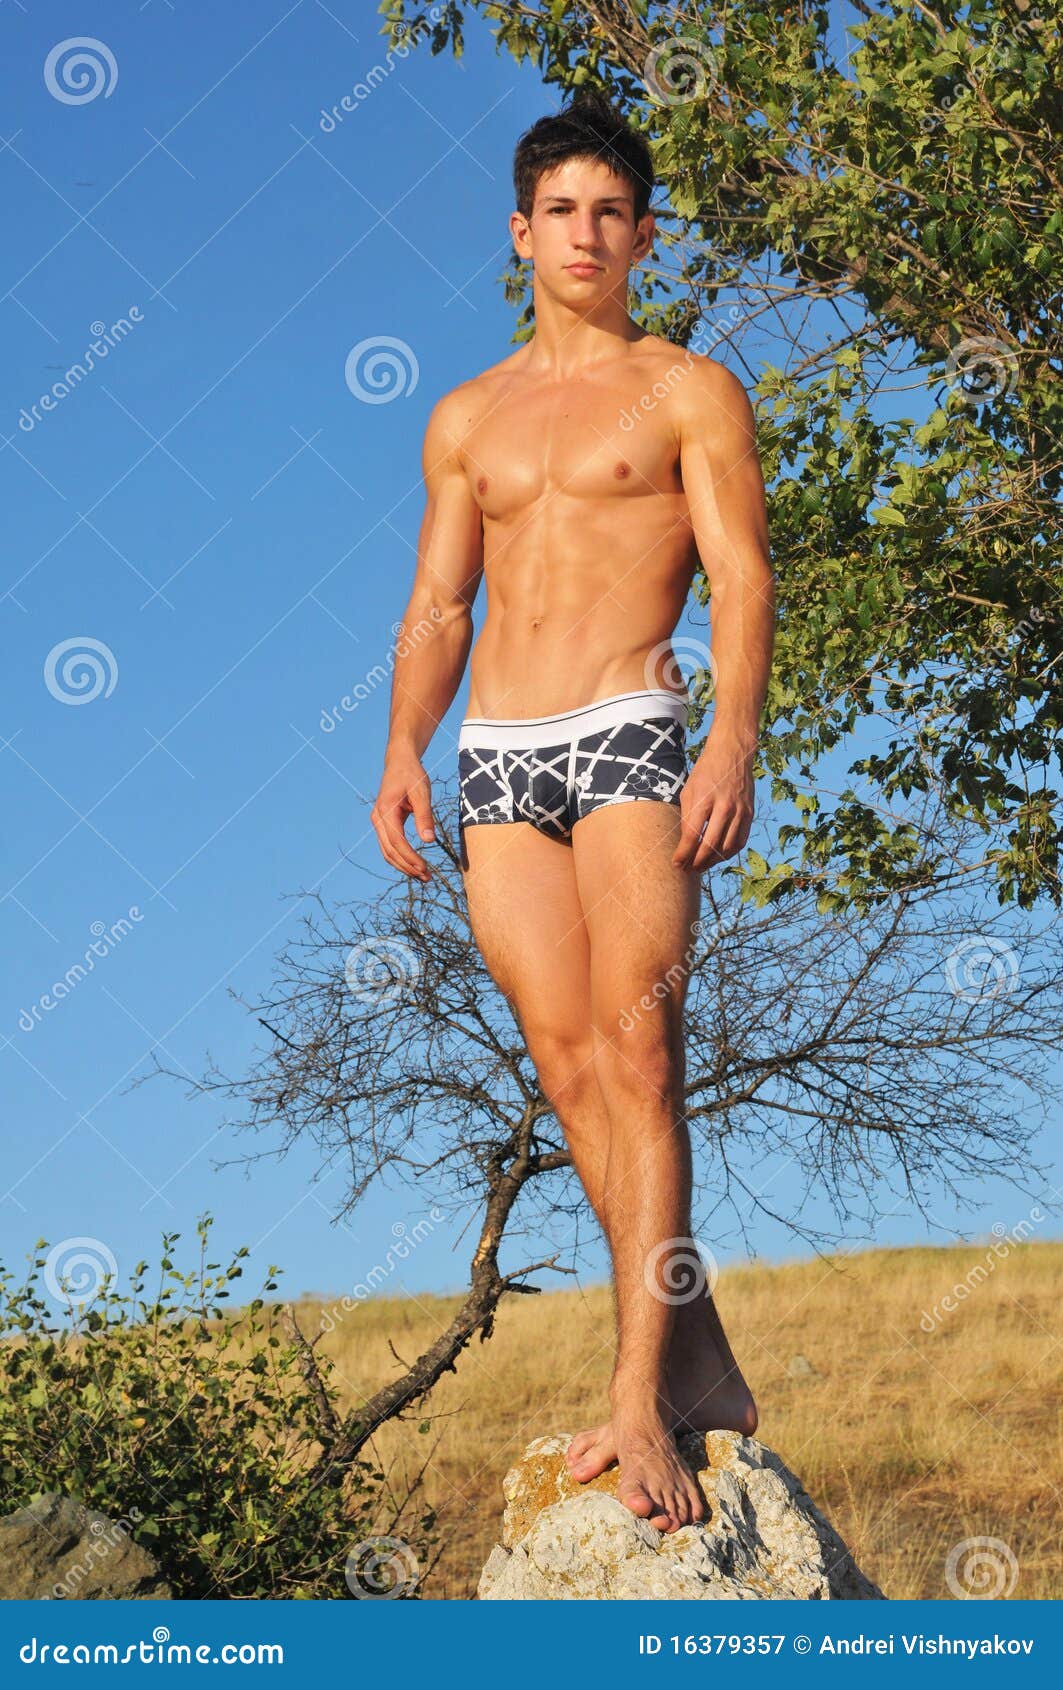 Male modeling underwear stock image. Image of bodybuilder - 16379357